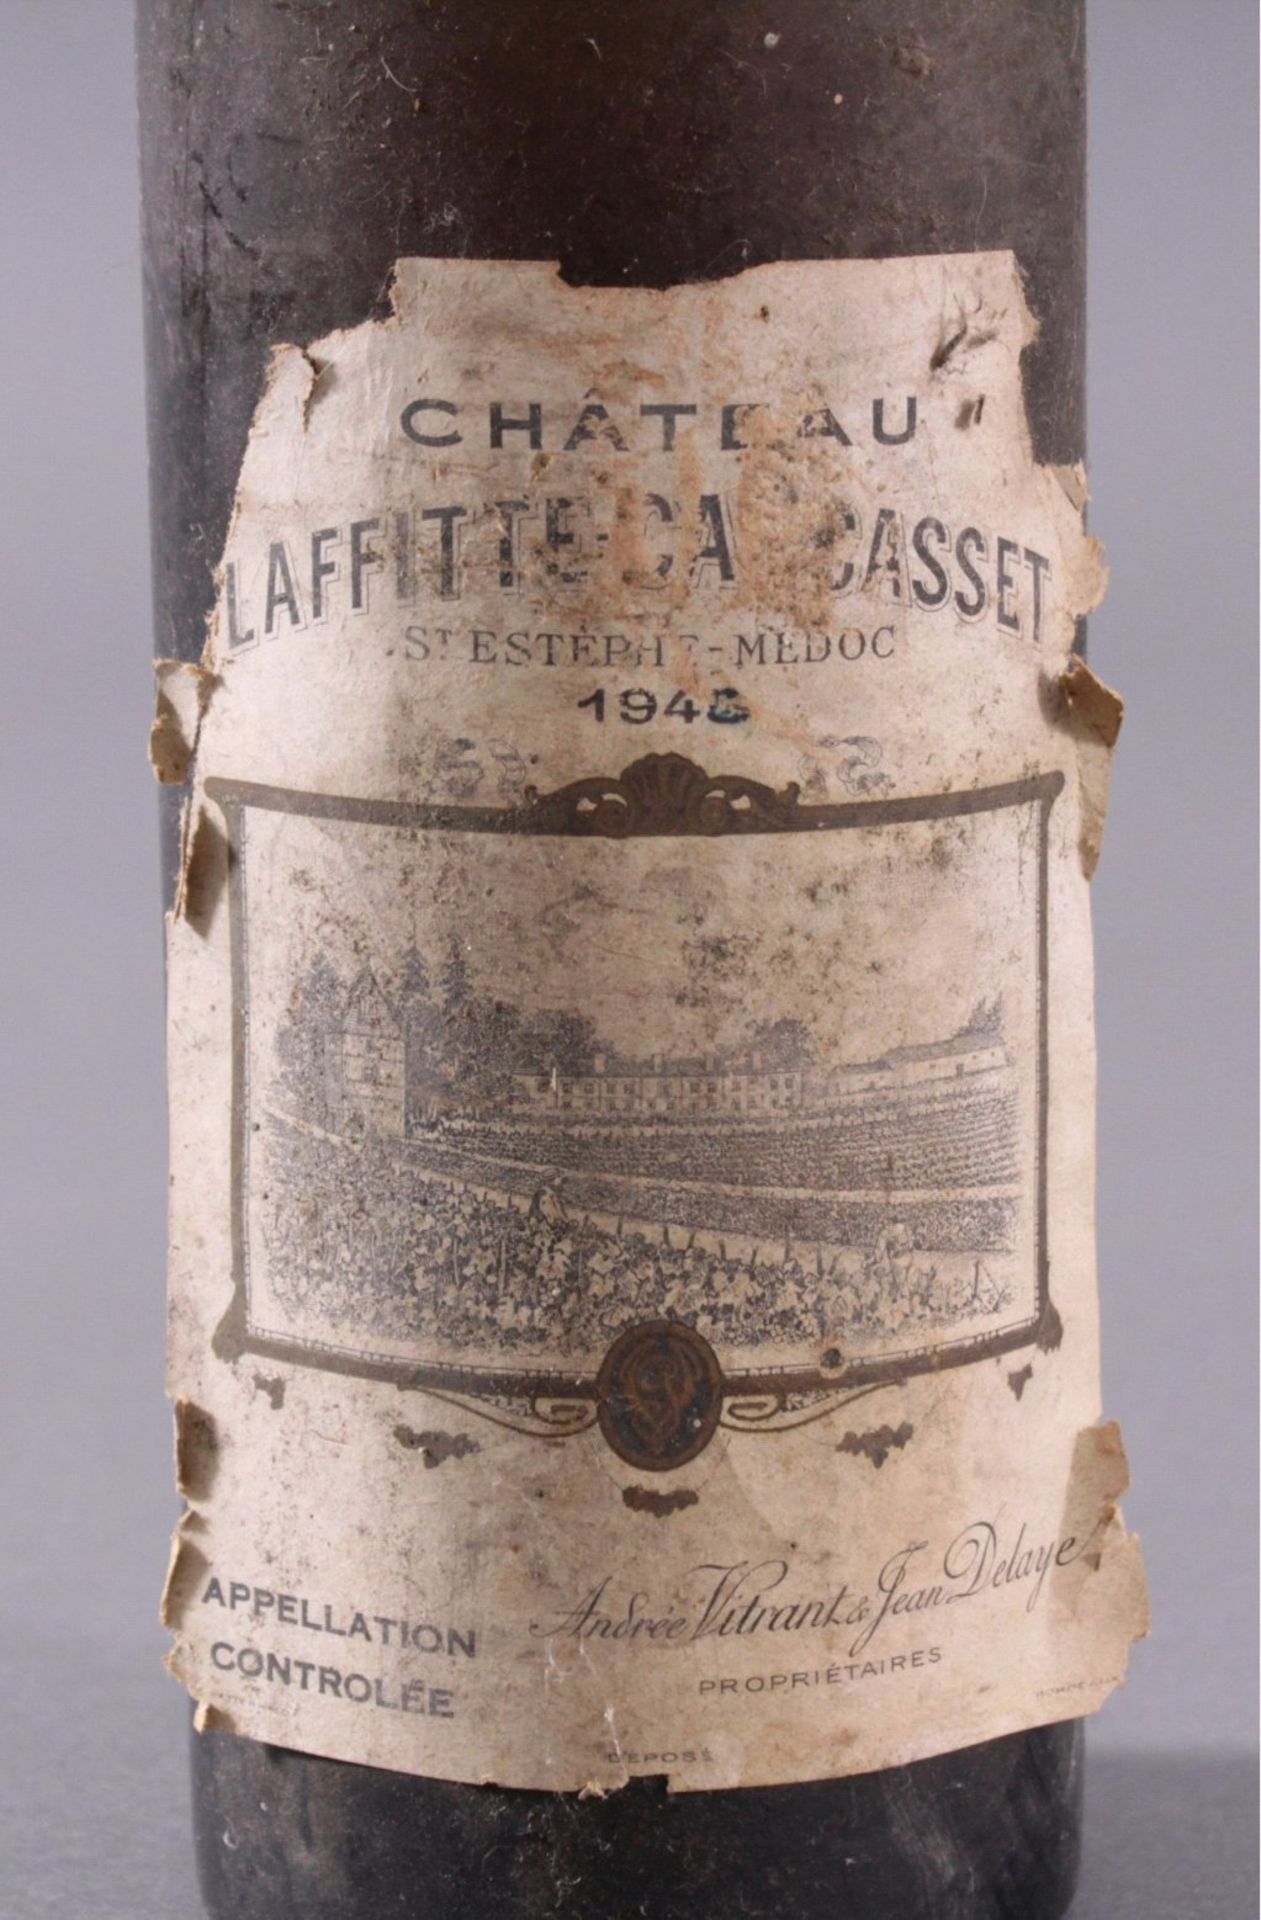 1948er Chateau Laffitte Ca CassetSt. Estephe-Medoc, Flüssigkeitsverlust ca. 8 bis 9 cm.Can not be - Bild 5 aus 6